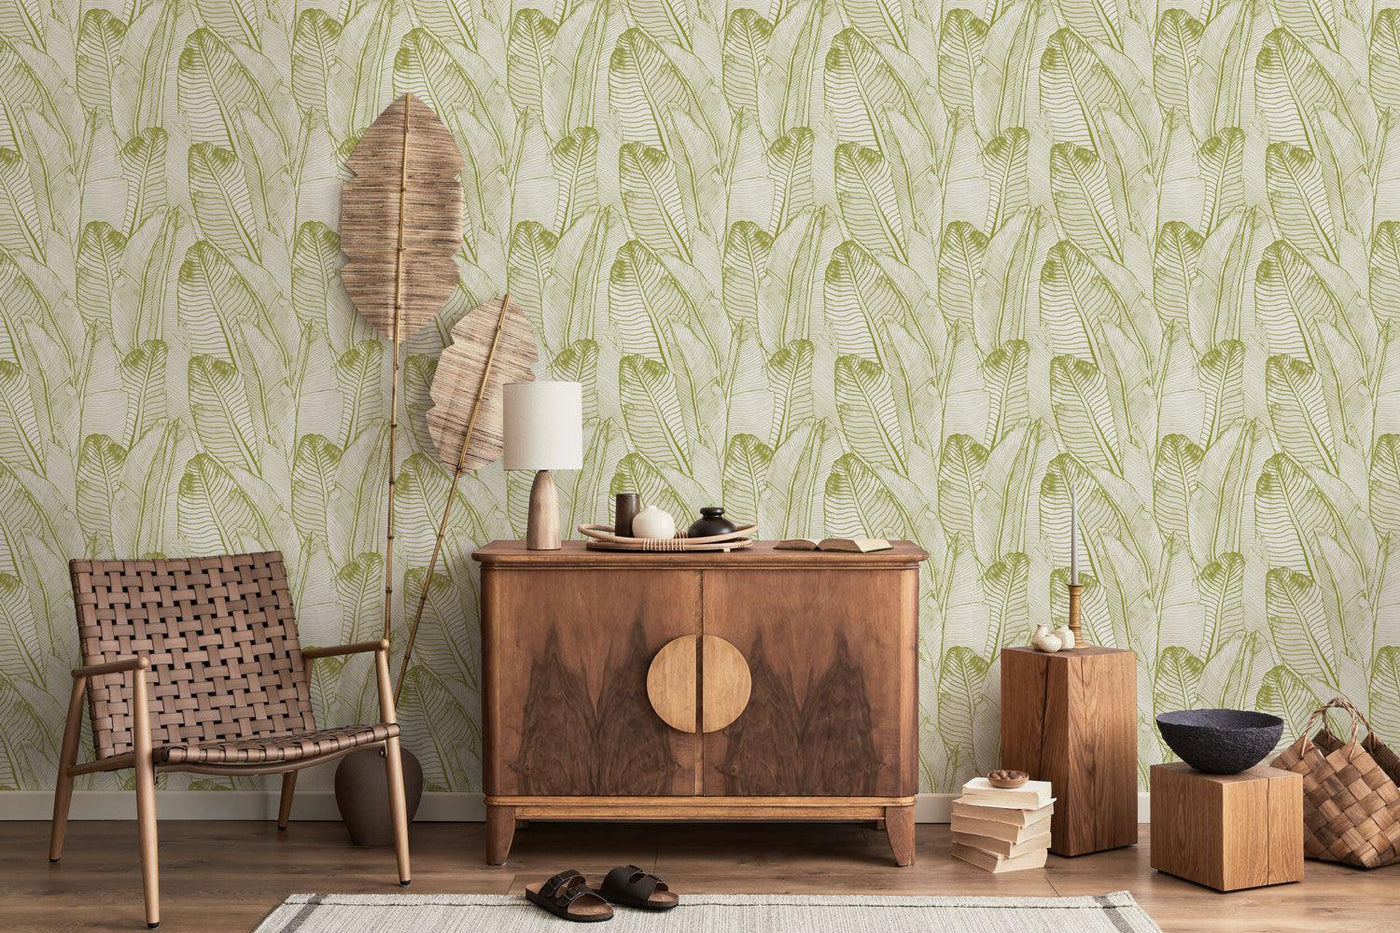 NUS4904  Teal Banana Leaf Peel and Stick Wallpaper  by NuWallpaper